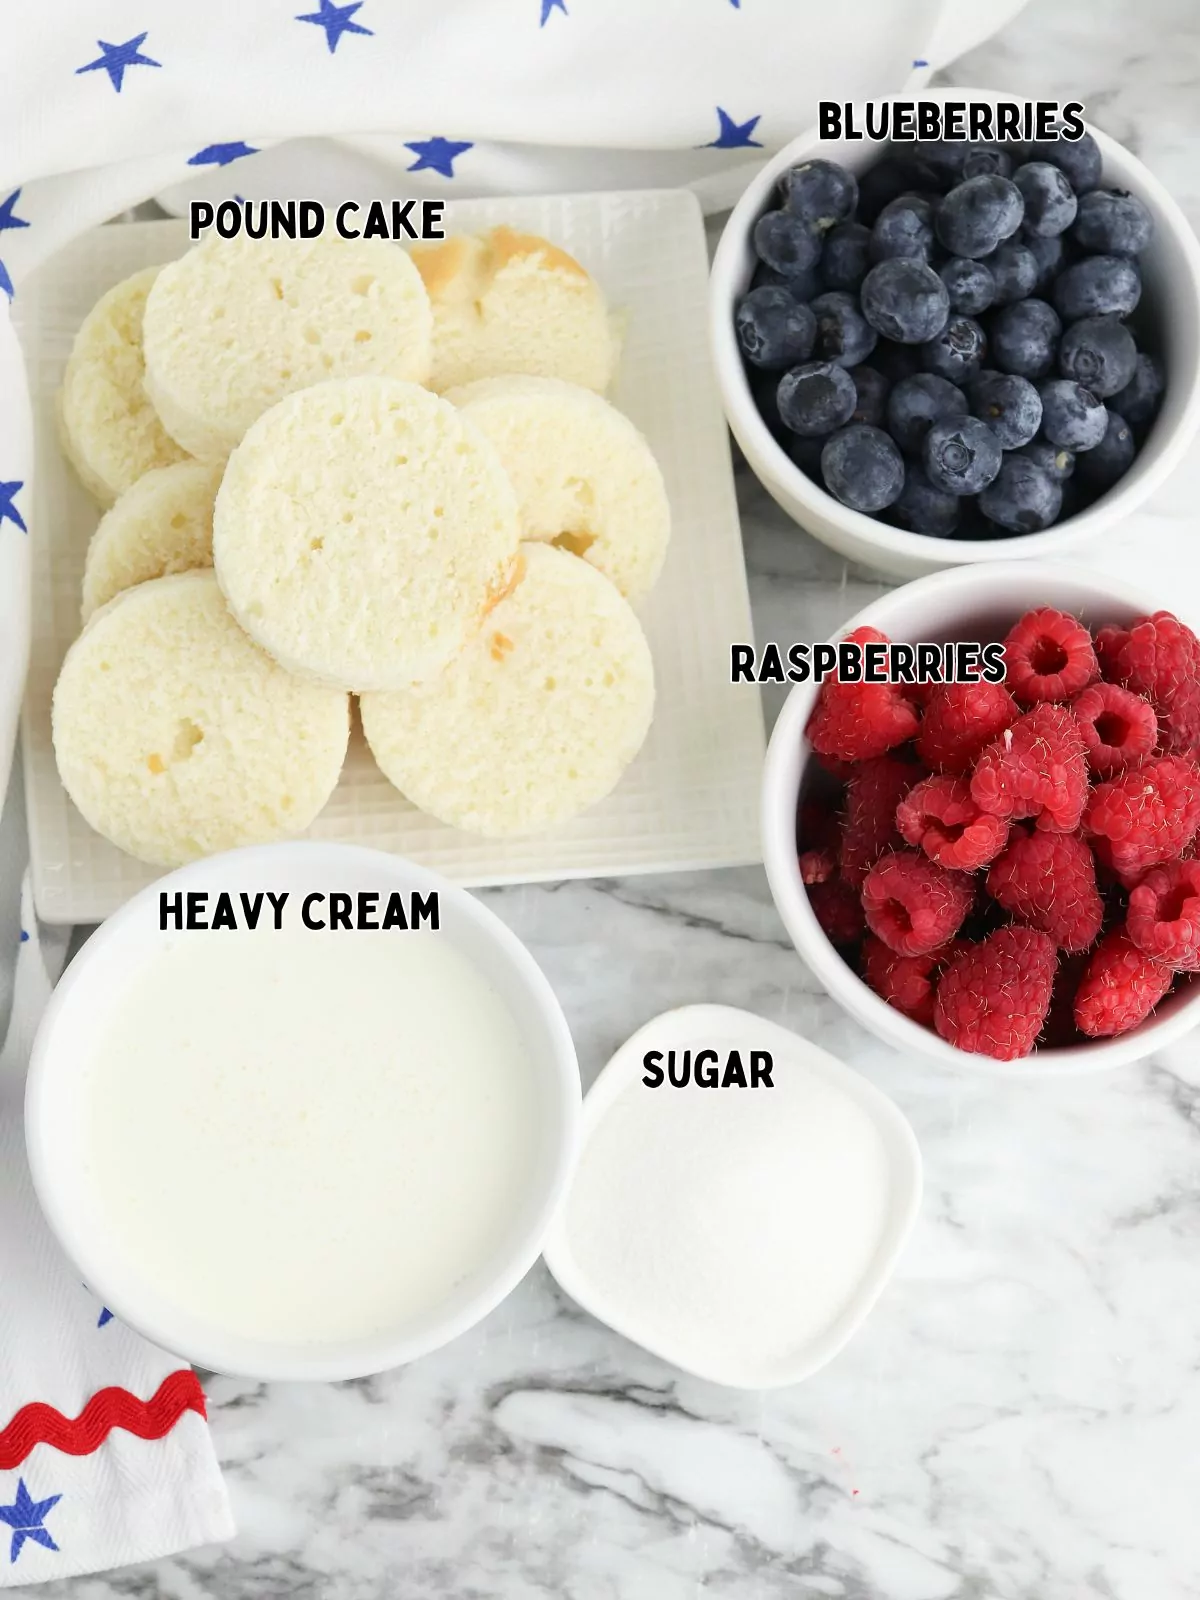 Ingredients, heavy cream, sugar, fresh raspberries, blueberries and pound cake.